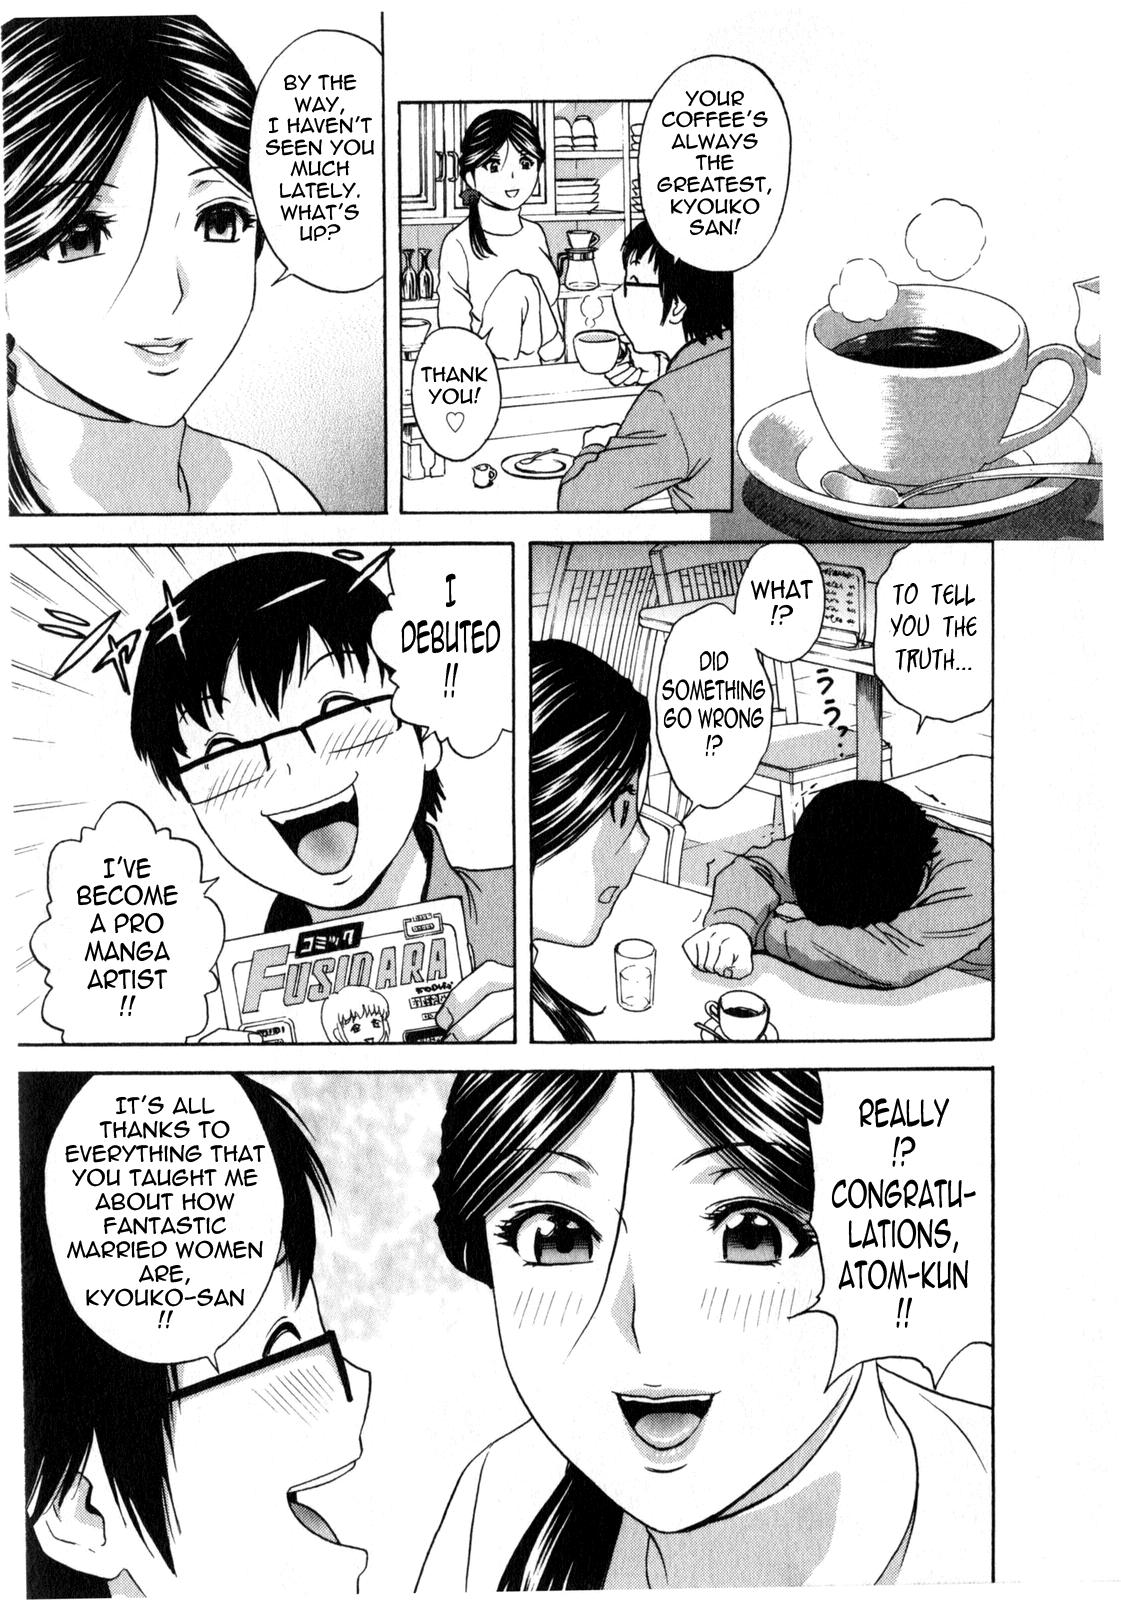 [Hidemaru] Life with Married Women Just Like a Manga 2 - Ch. 1-4 [English] {Tadanohito} 48